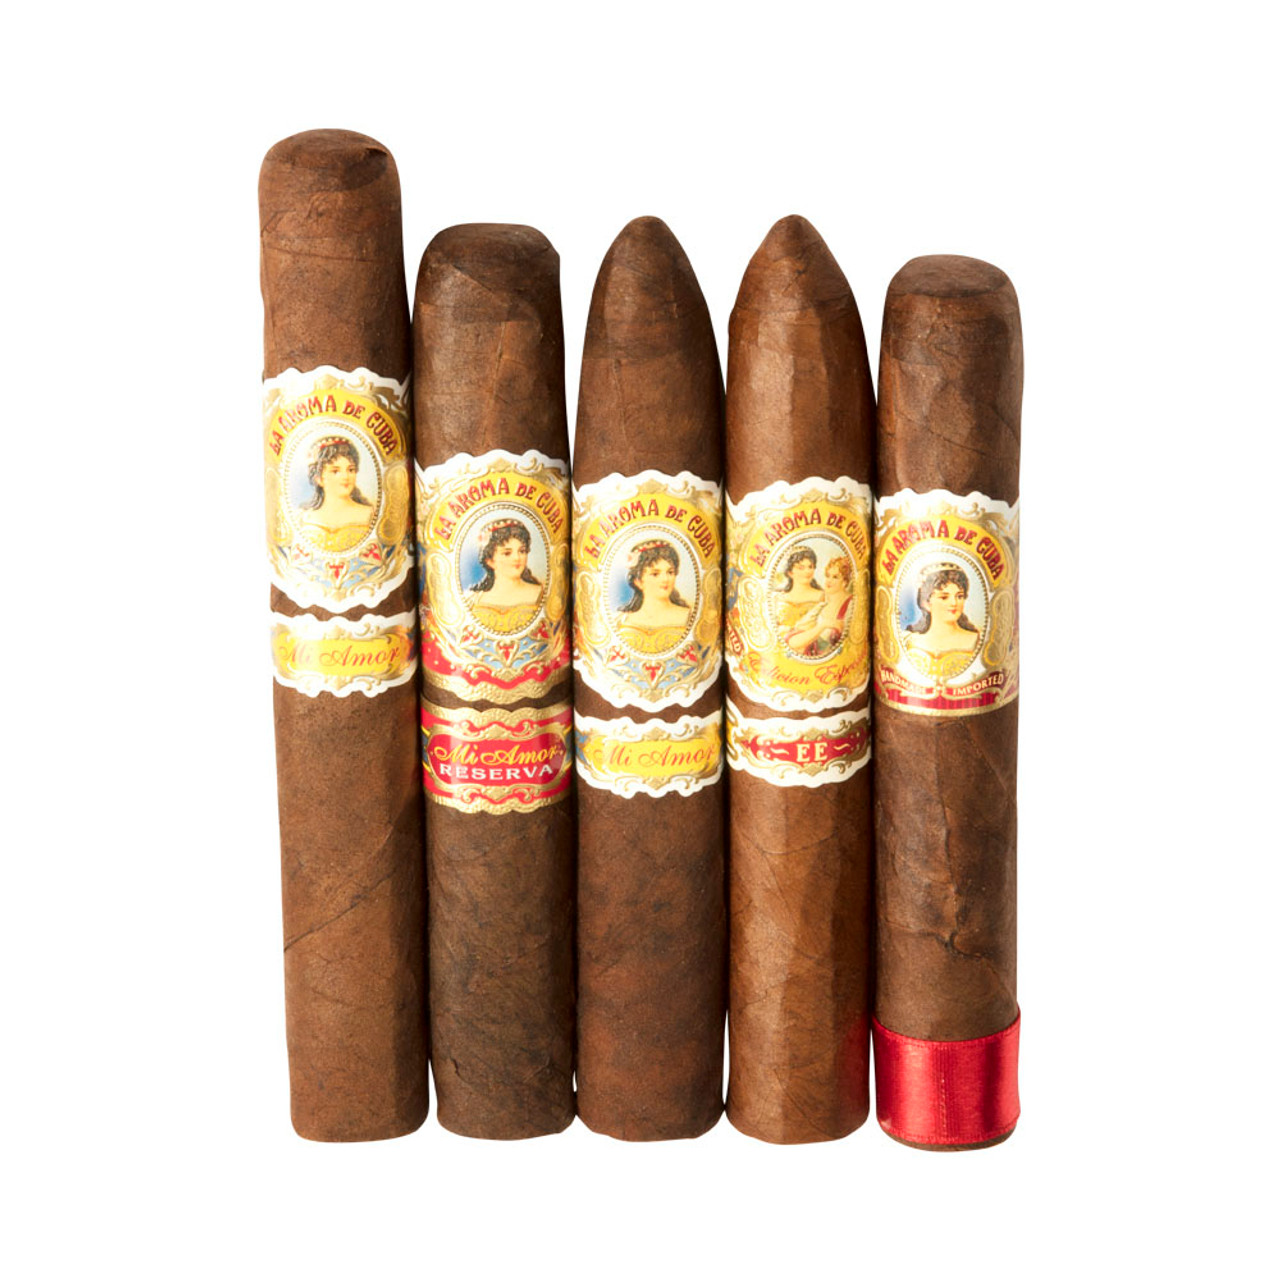 Cigar Samplers La Aroma de Cuba Best Seller Assortment Cigars (Box of 5)